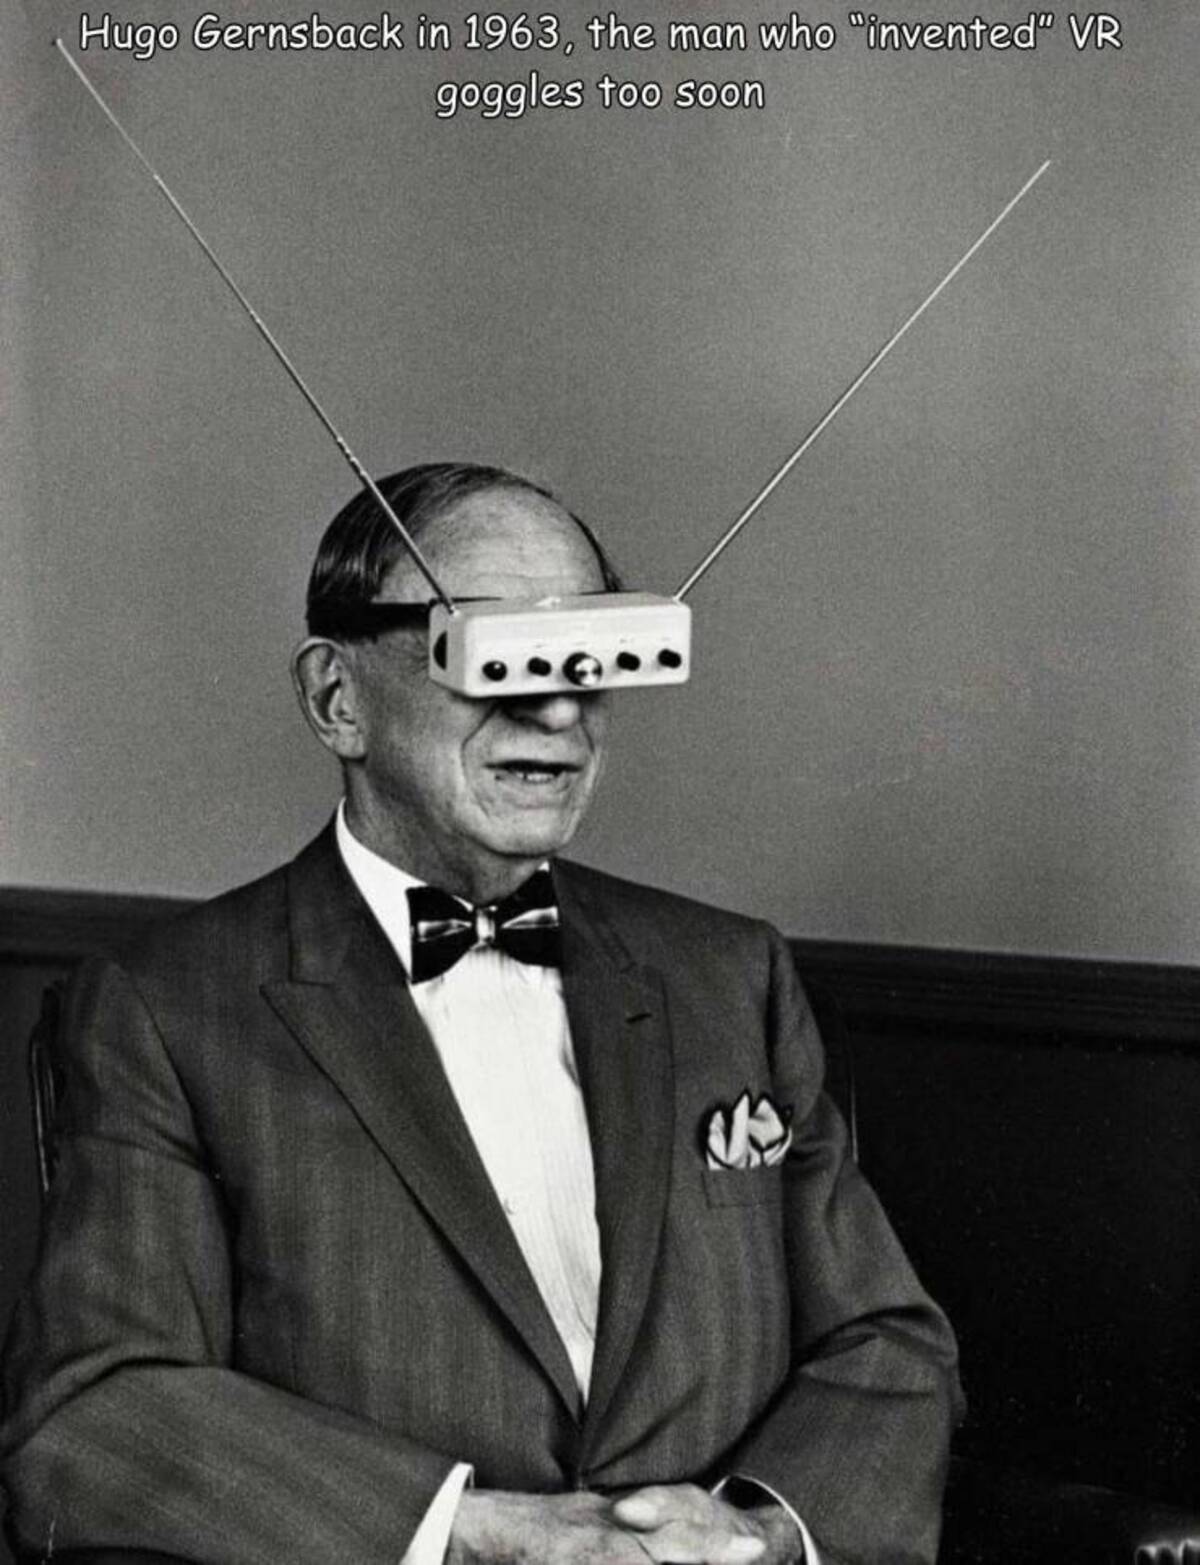 hugo gernsback - Hugo Gernsback in 1963, the man who "invented" Vr goggles too soon s